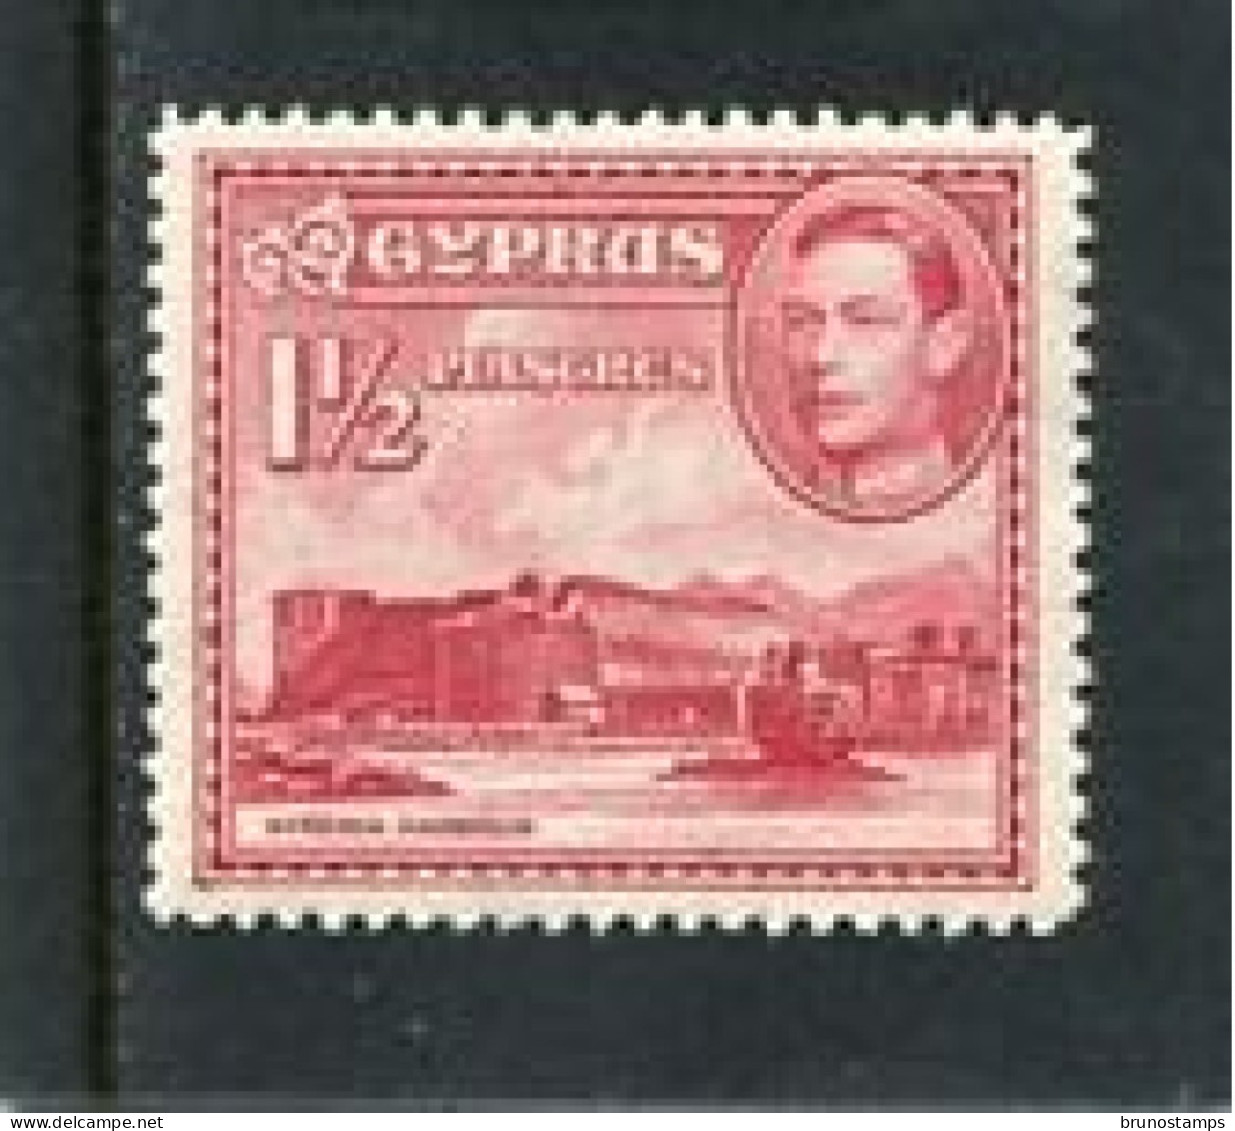 CYPRUS - 1938   GEORGE VI  1 1/2 Pi  MINT NH - Cyprus (...-1960)